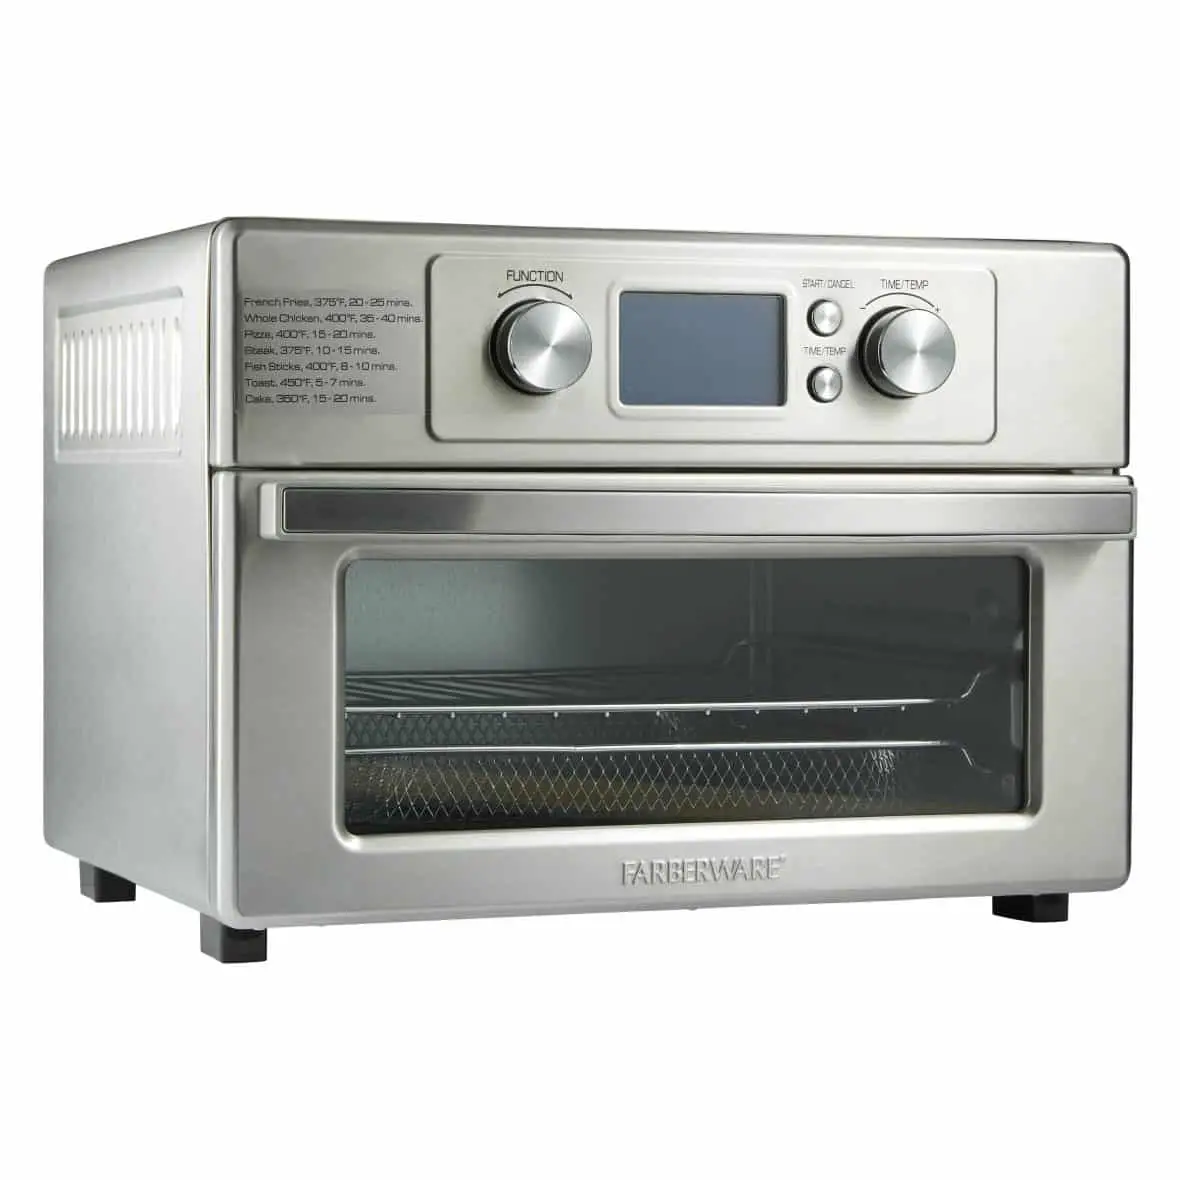 Farberware Air Fryer/ Toaster Oven $69.88